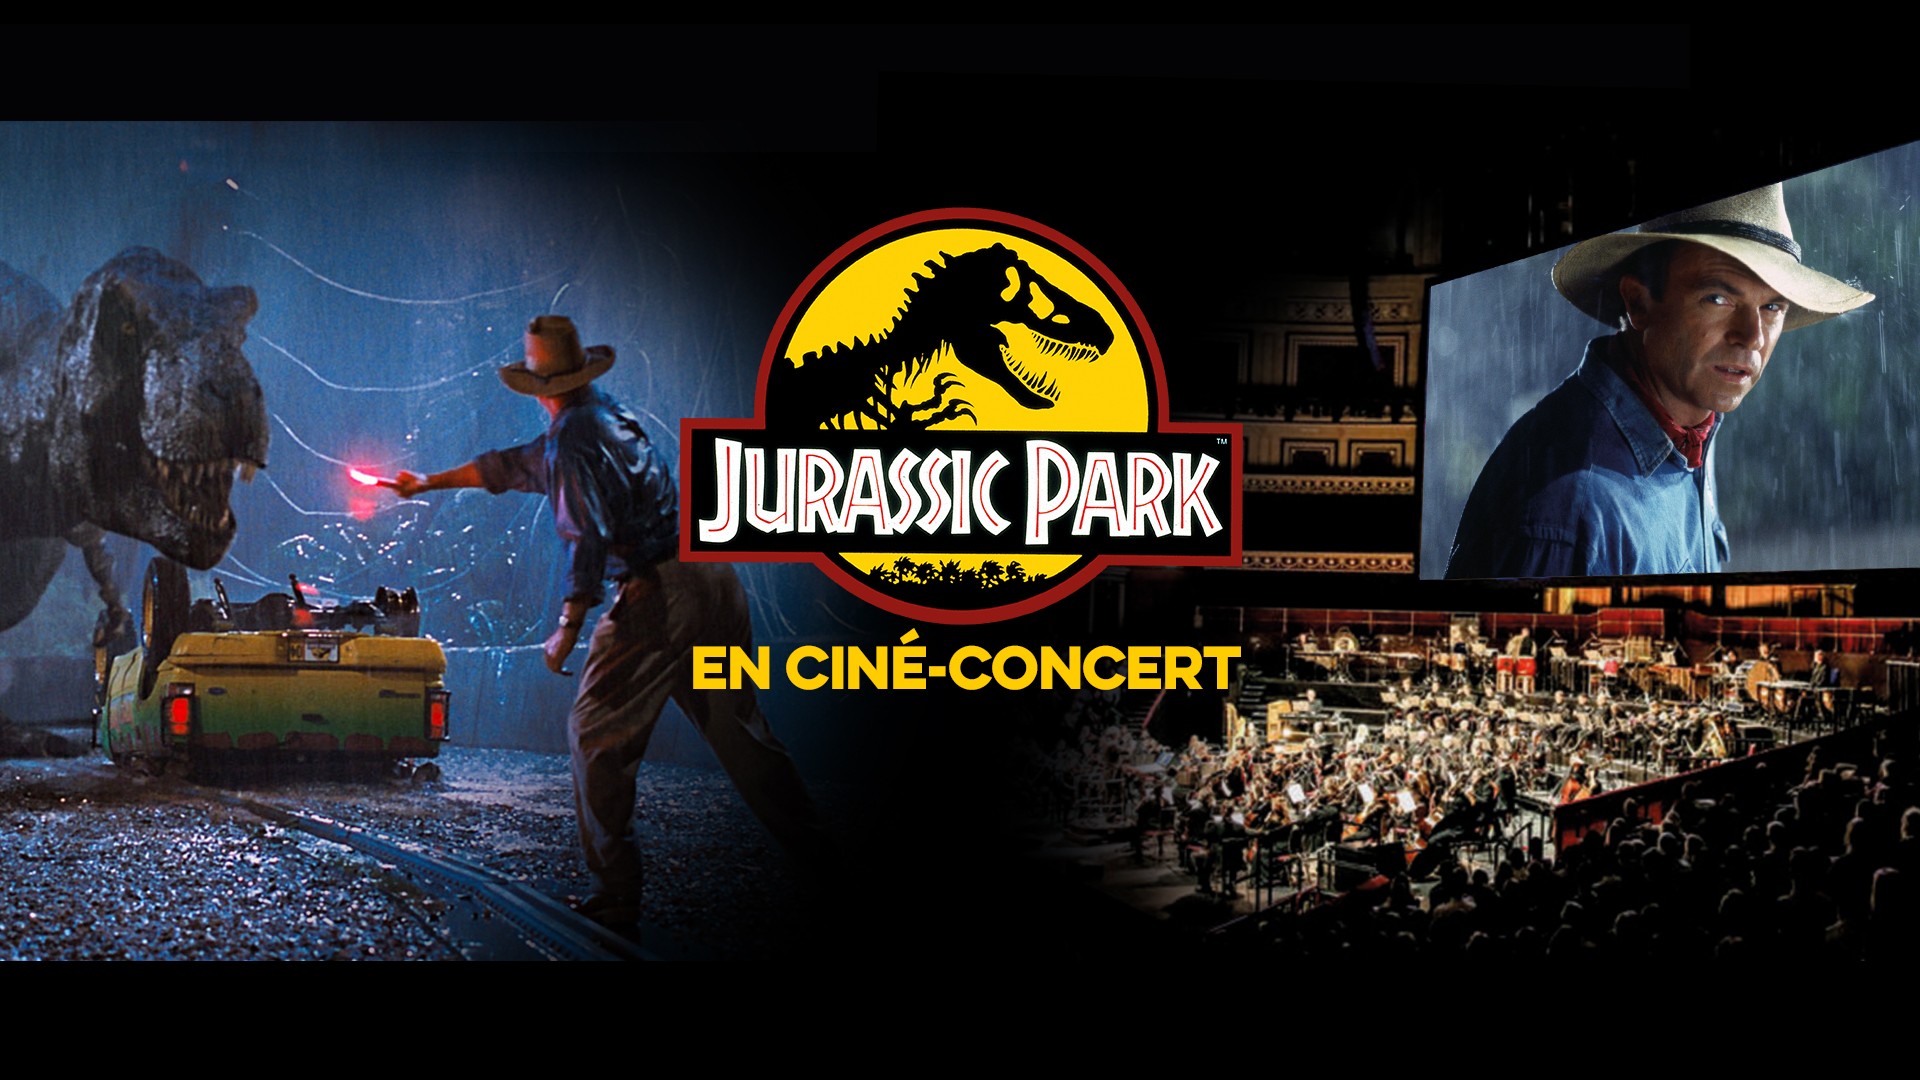 https://the-place-to-be.fr/wp-content/uploads/2020/02/cine-concert-jurassic-park-2020-arkea-arena-bordeaux-floirac.jpg